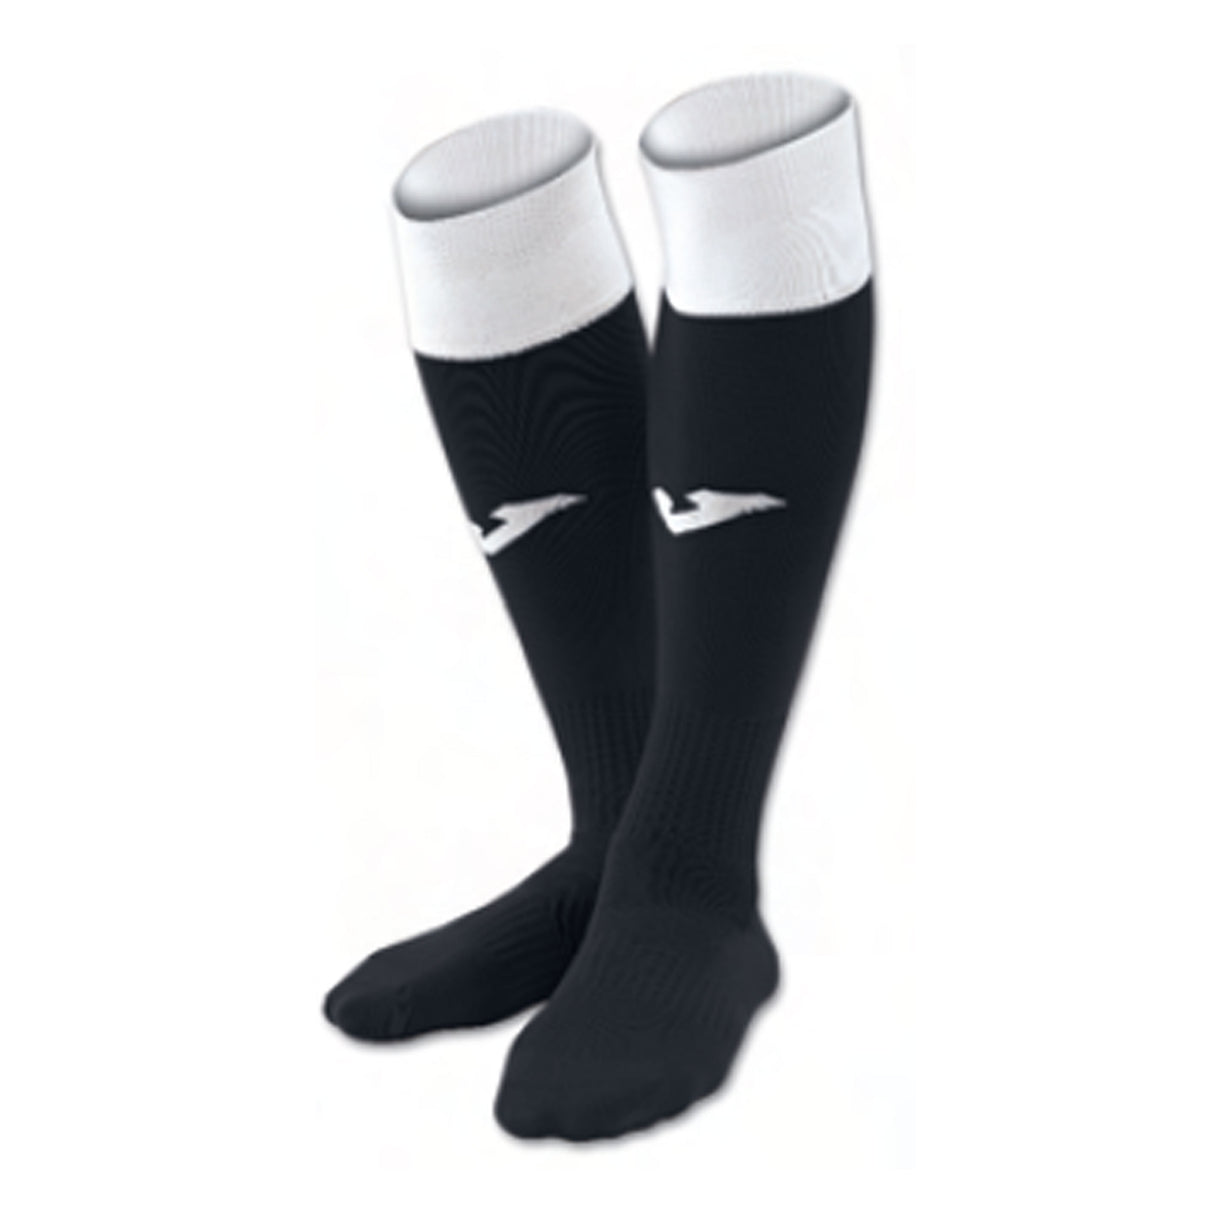 JOMA Calcio Stanislas Soccer Socks